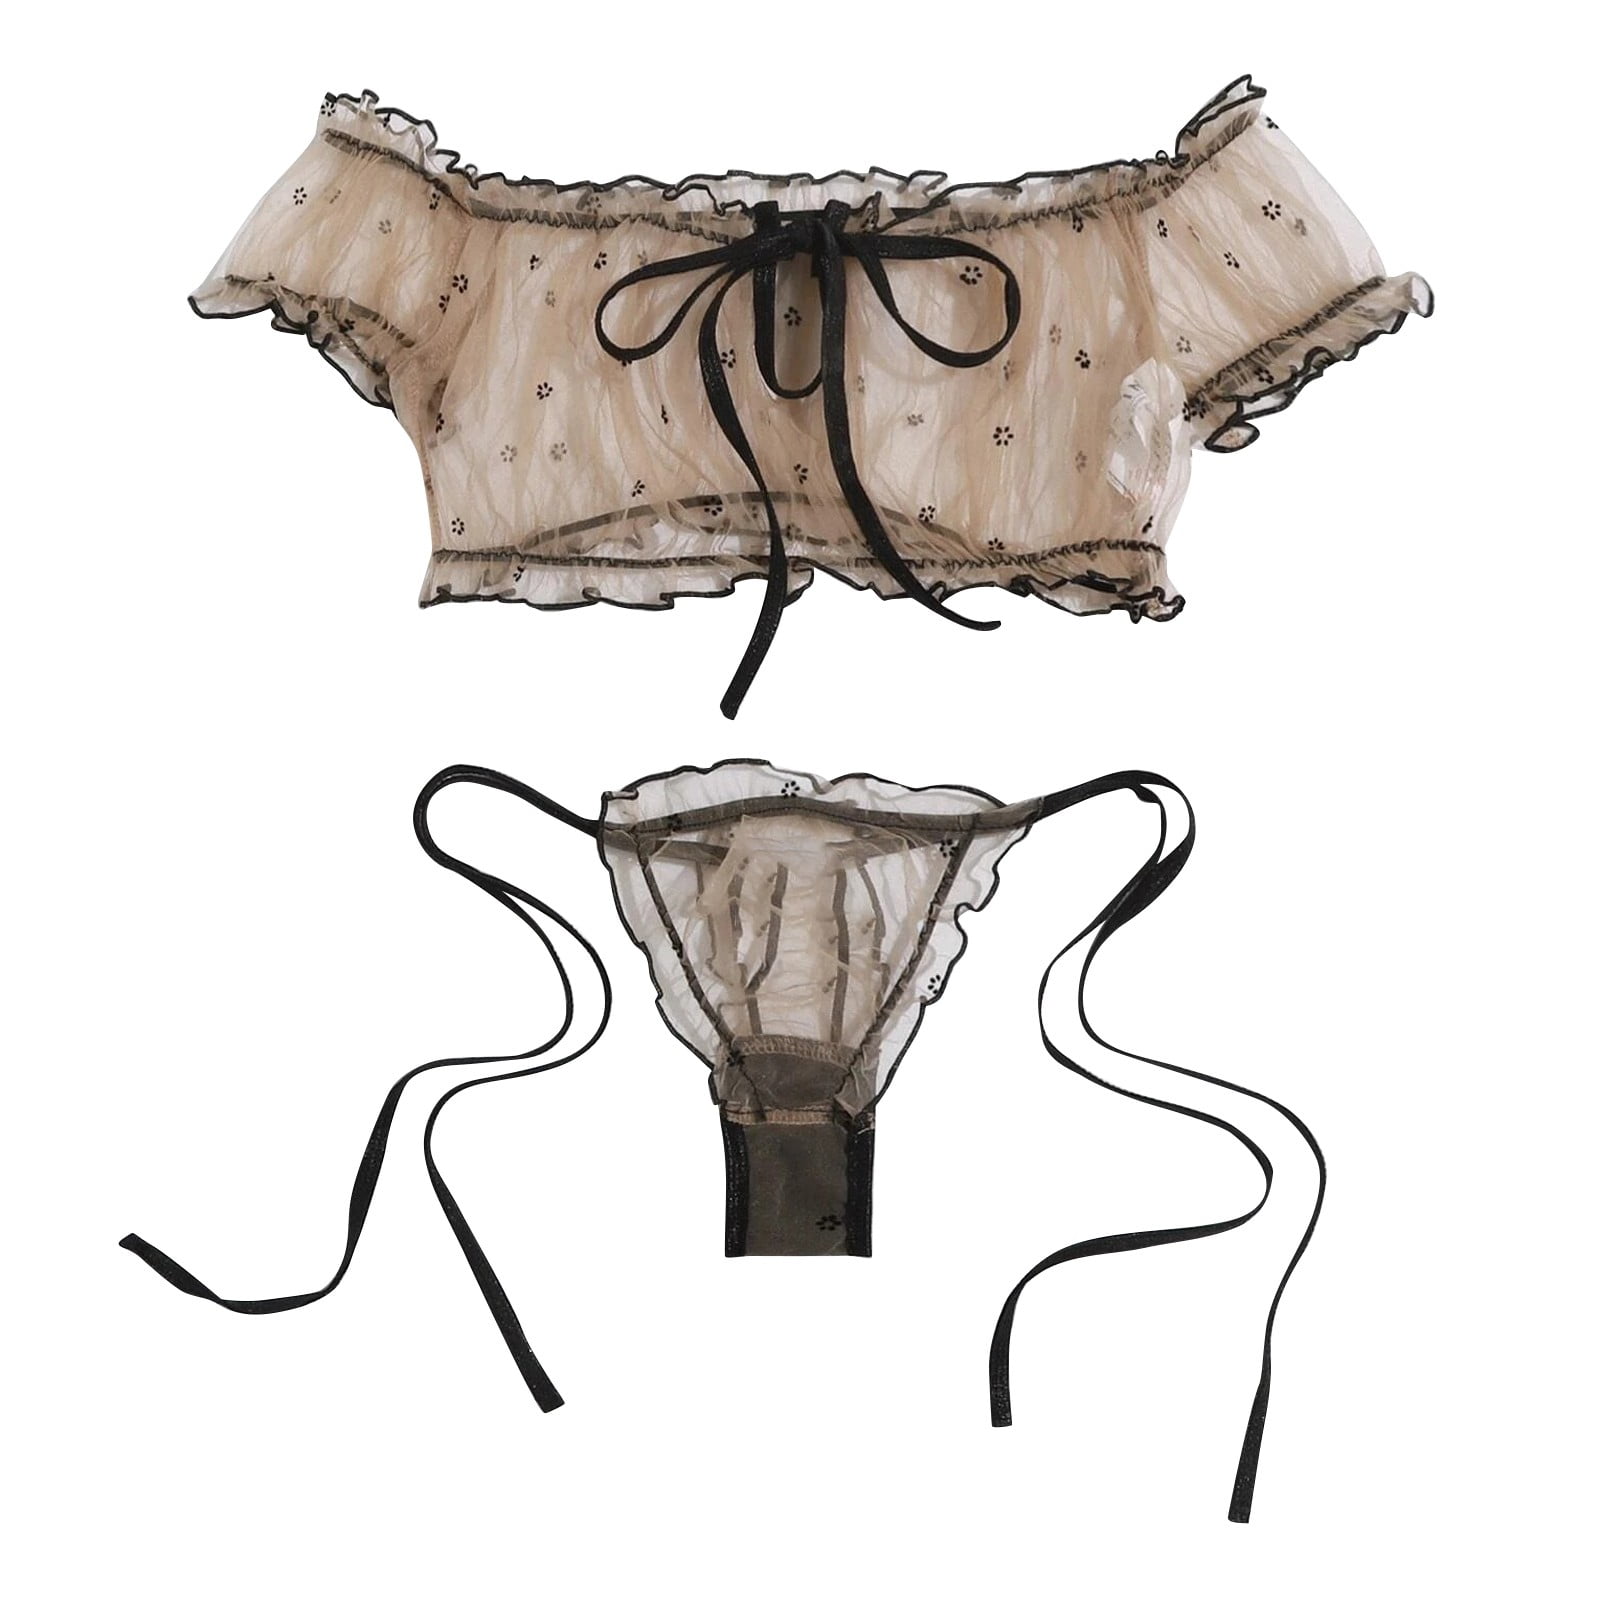 Black women's underwear Bra and Panties two-piece Transparent